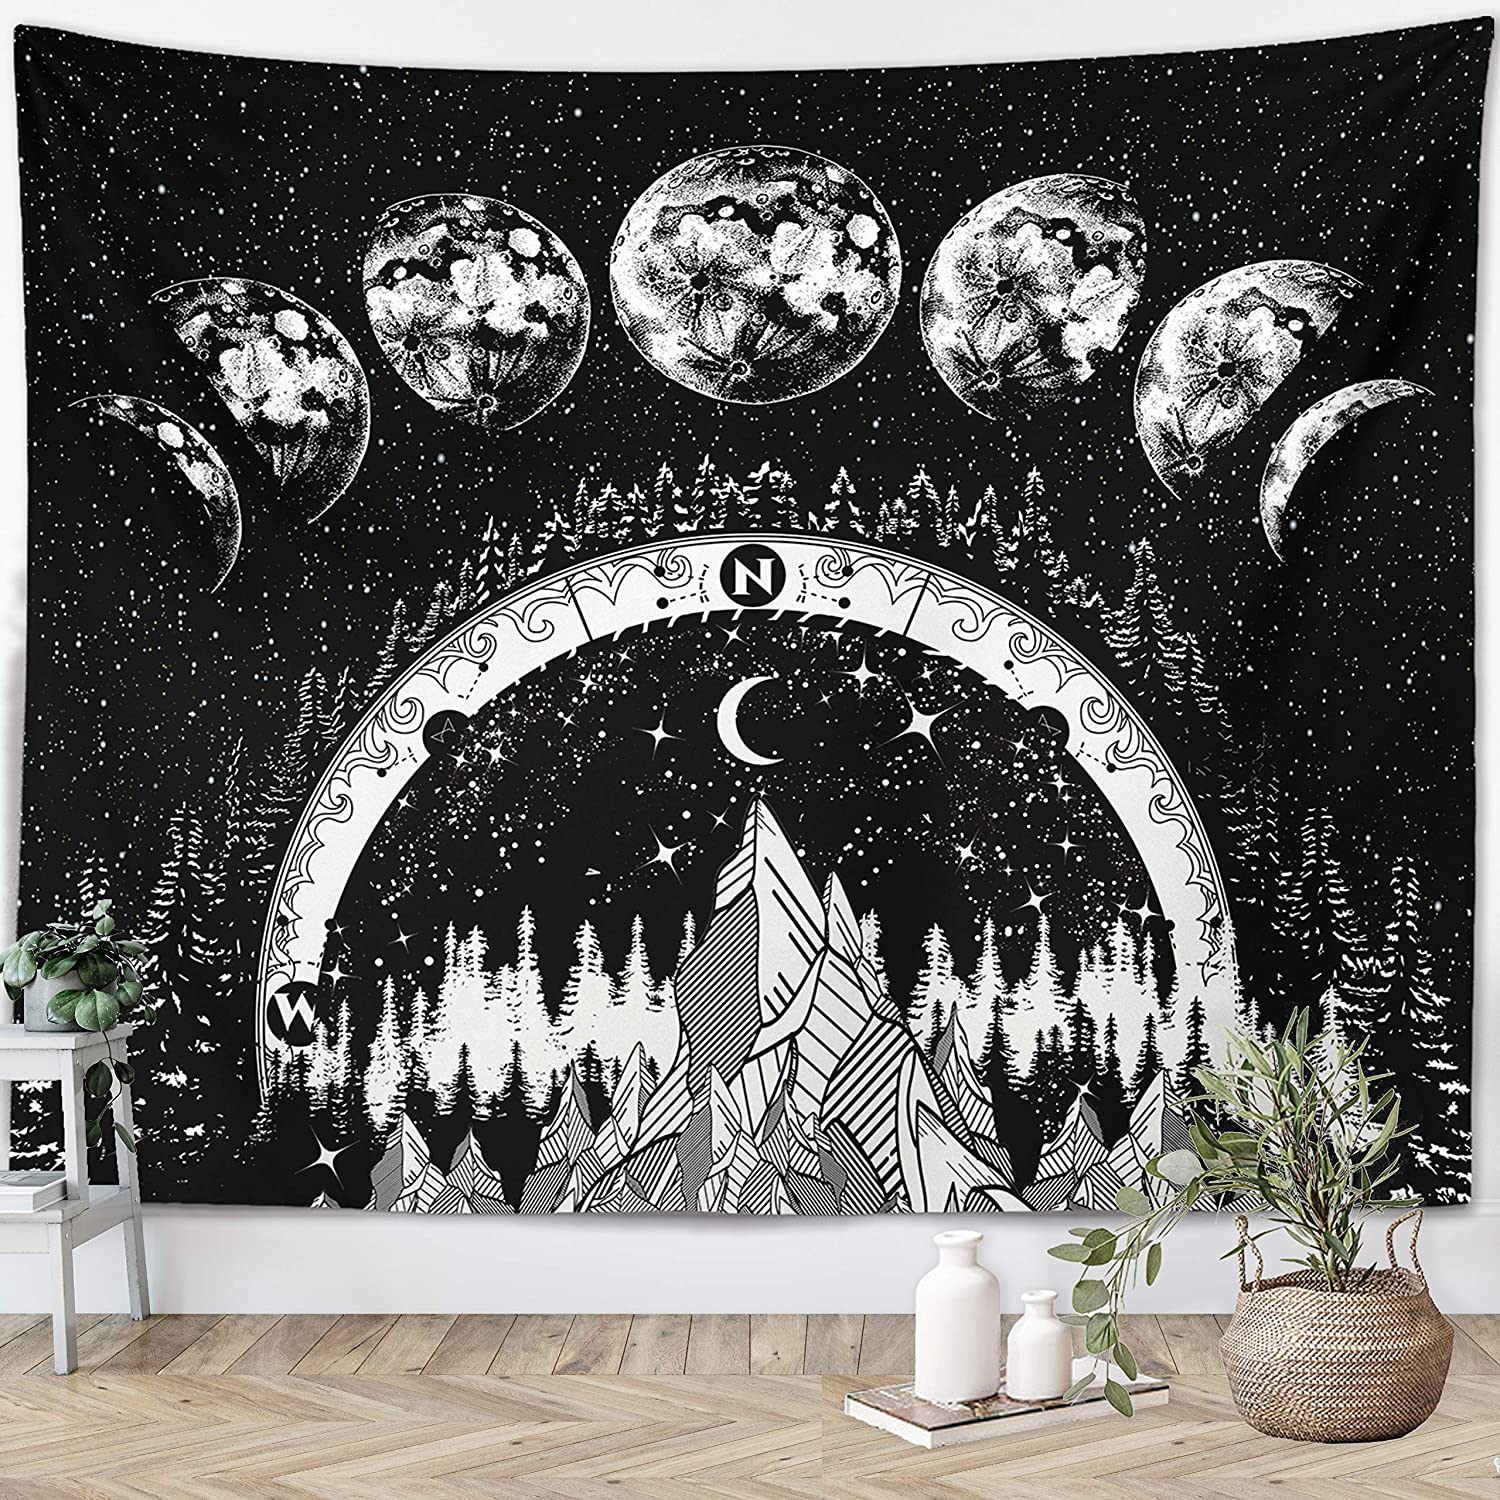 Starry Night Moon Landschap Sky Muur Opknoping Bohemian Zwart Wit Decor Galaxy Tapestry Voor Boerderij Decor Keuken